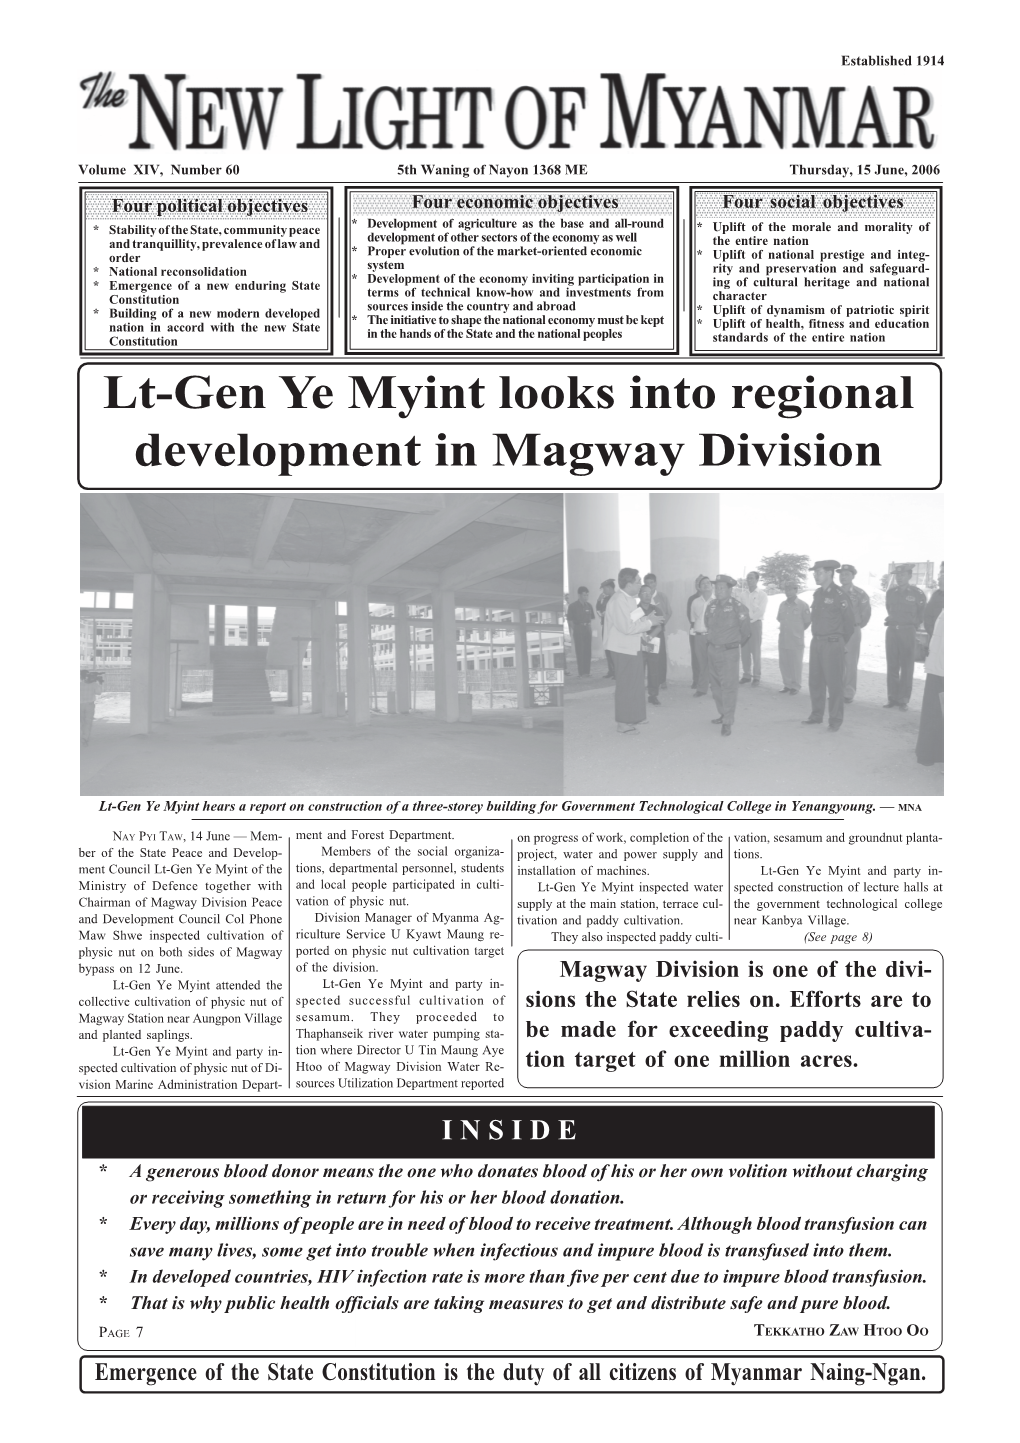 Lt-Gen Ye Myint Looks Into Regional Development in Magway Division